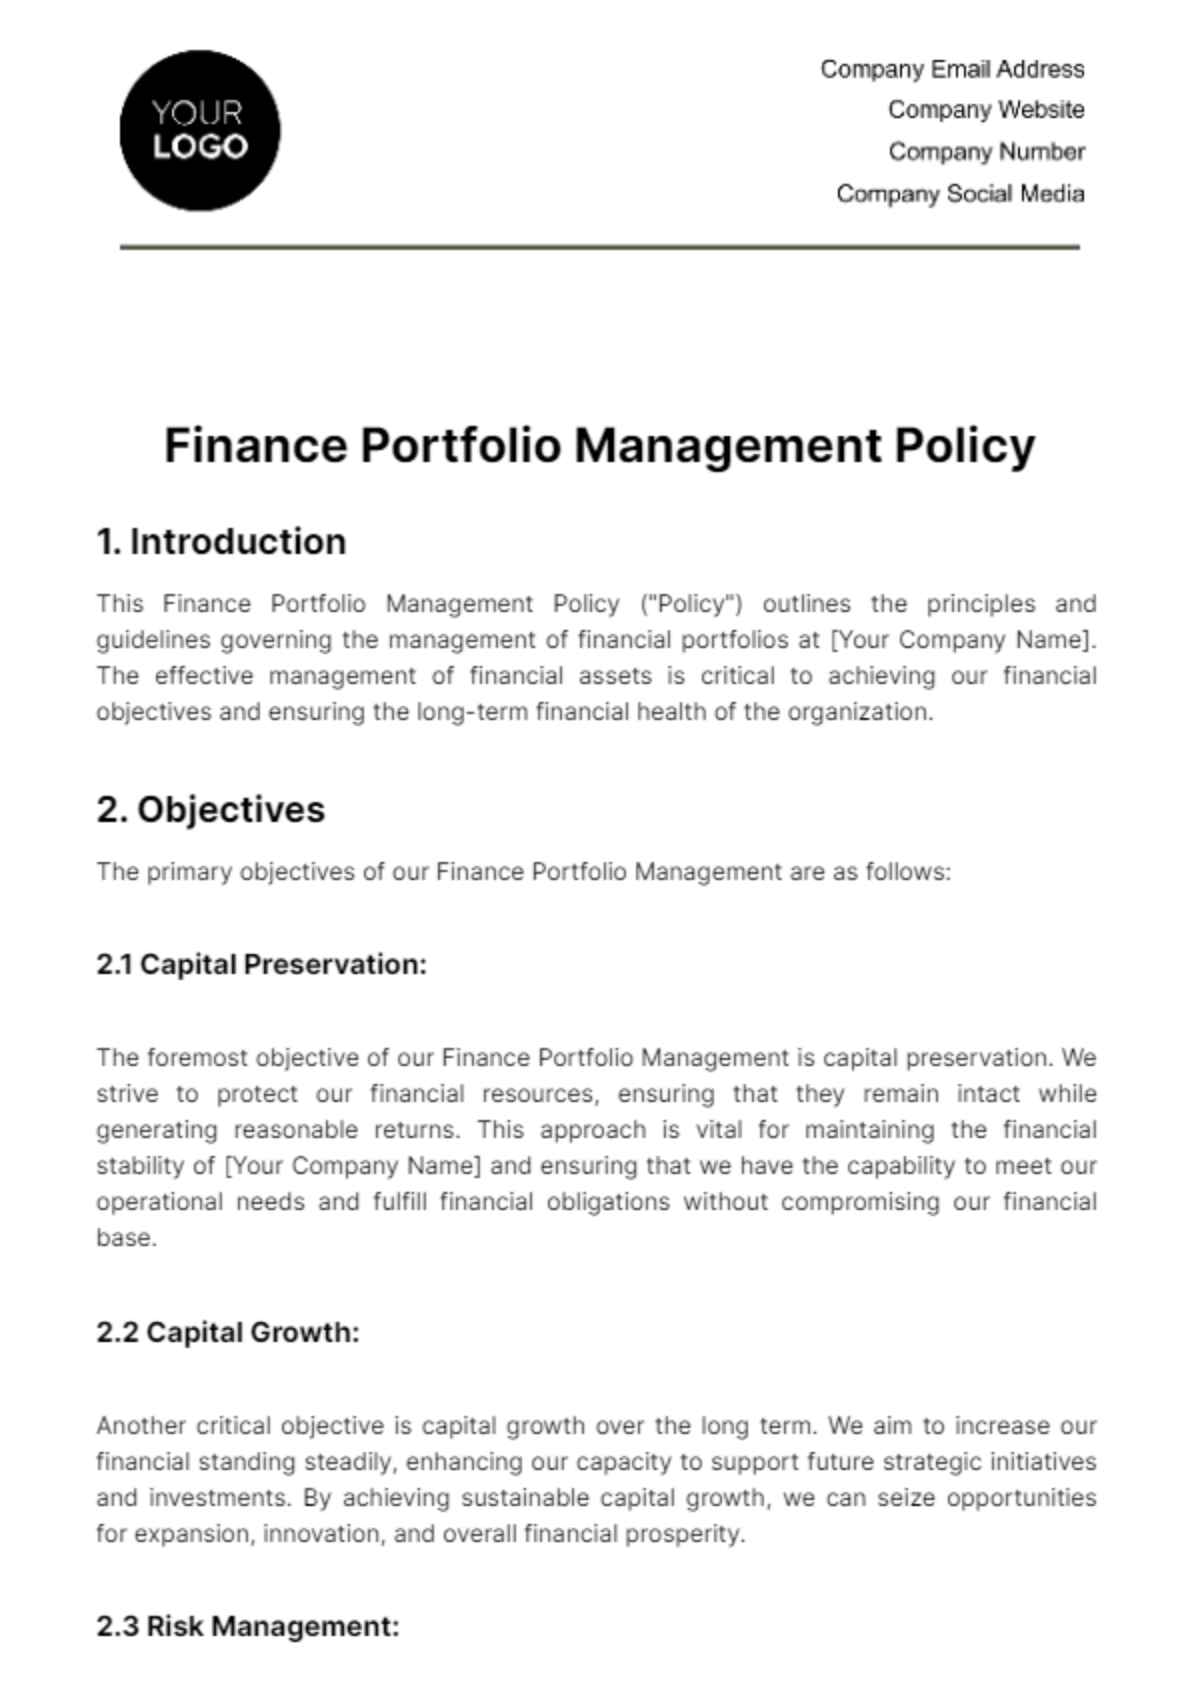 Finance Portfolio Management Policy Template